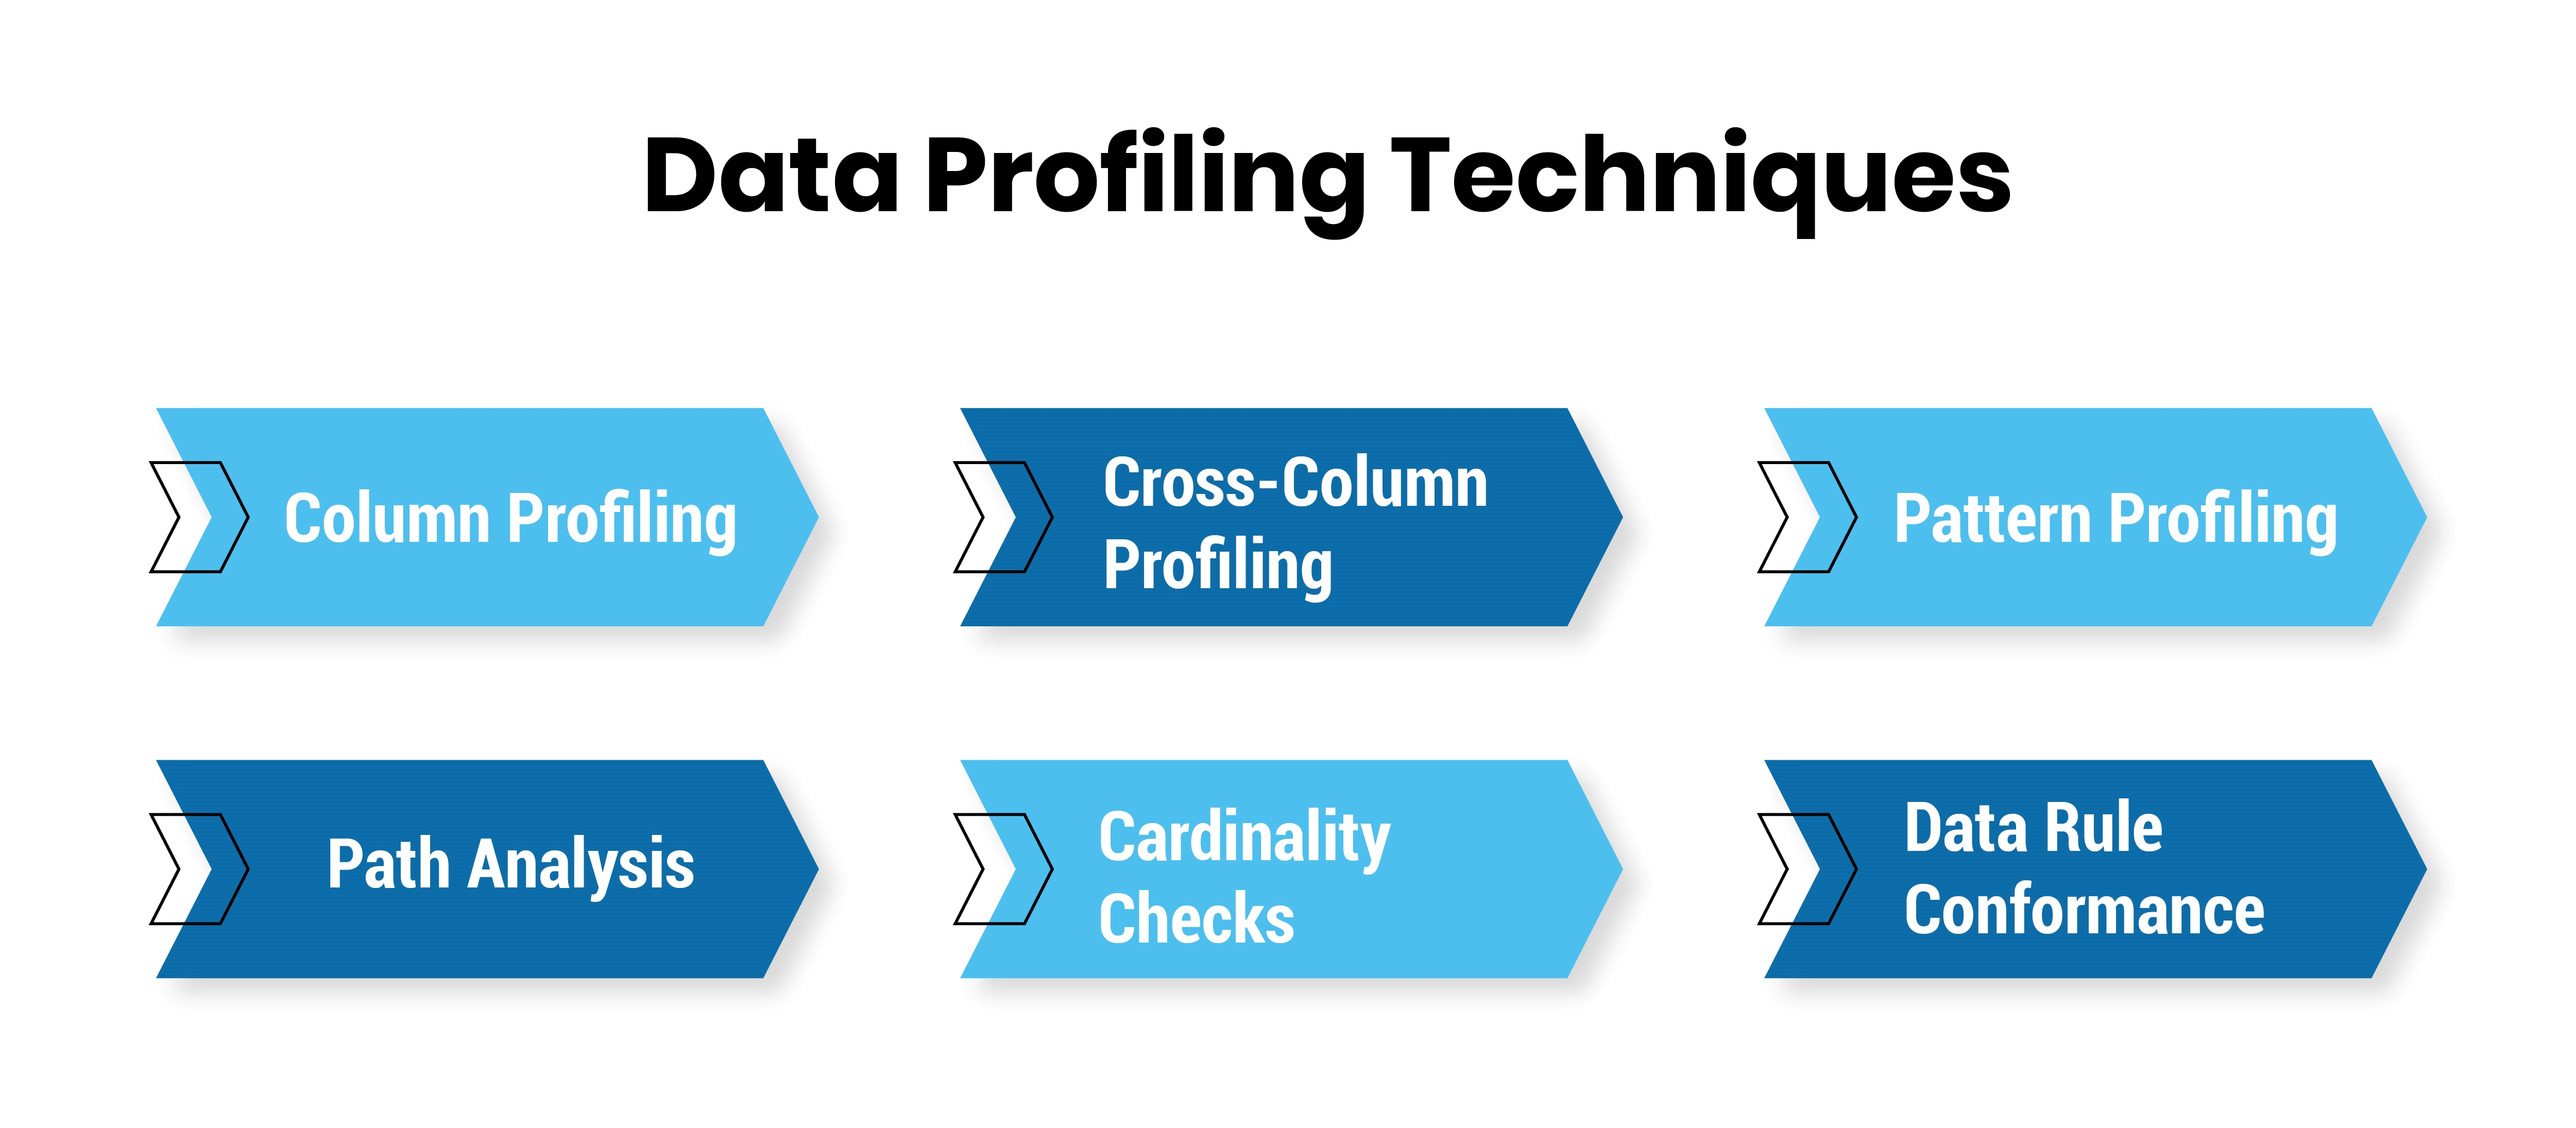 Data Profiling Techniques